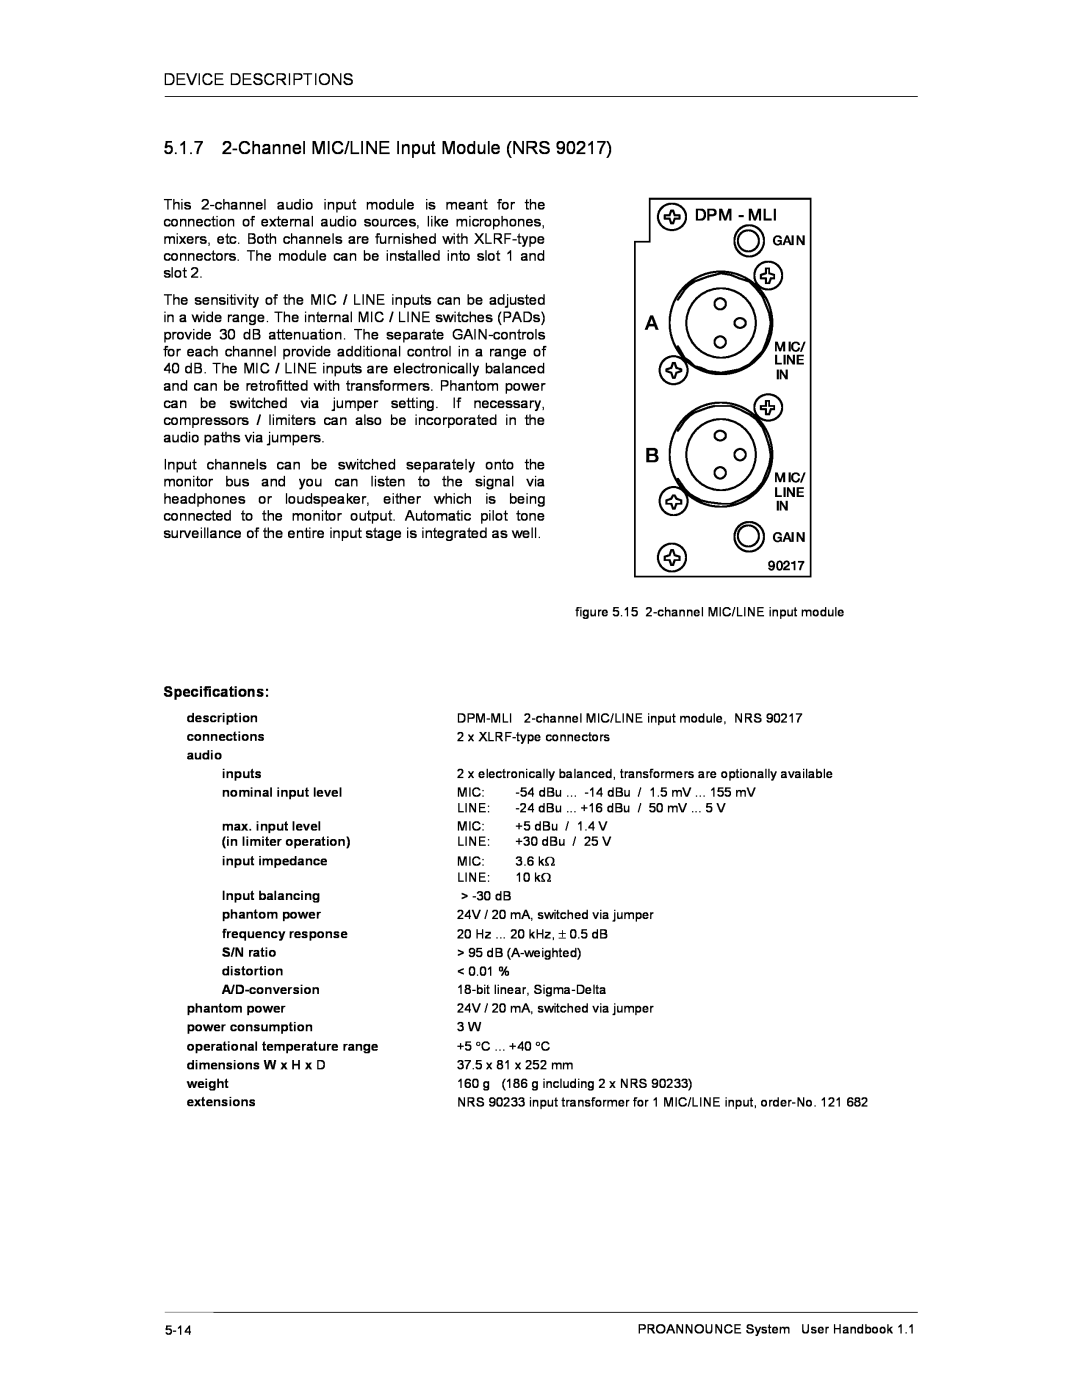 Dynacord DPM 4000 manual 5.1.7 2-ChannelMIC/LINE Input Module NRS, Dpm - Mli 